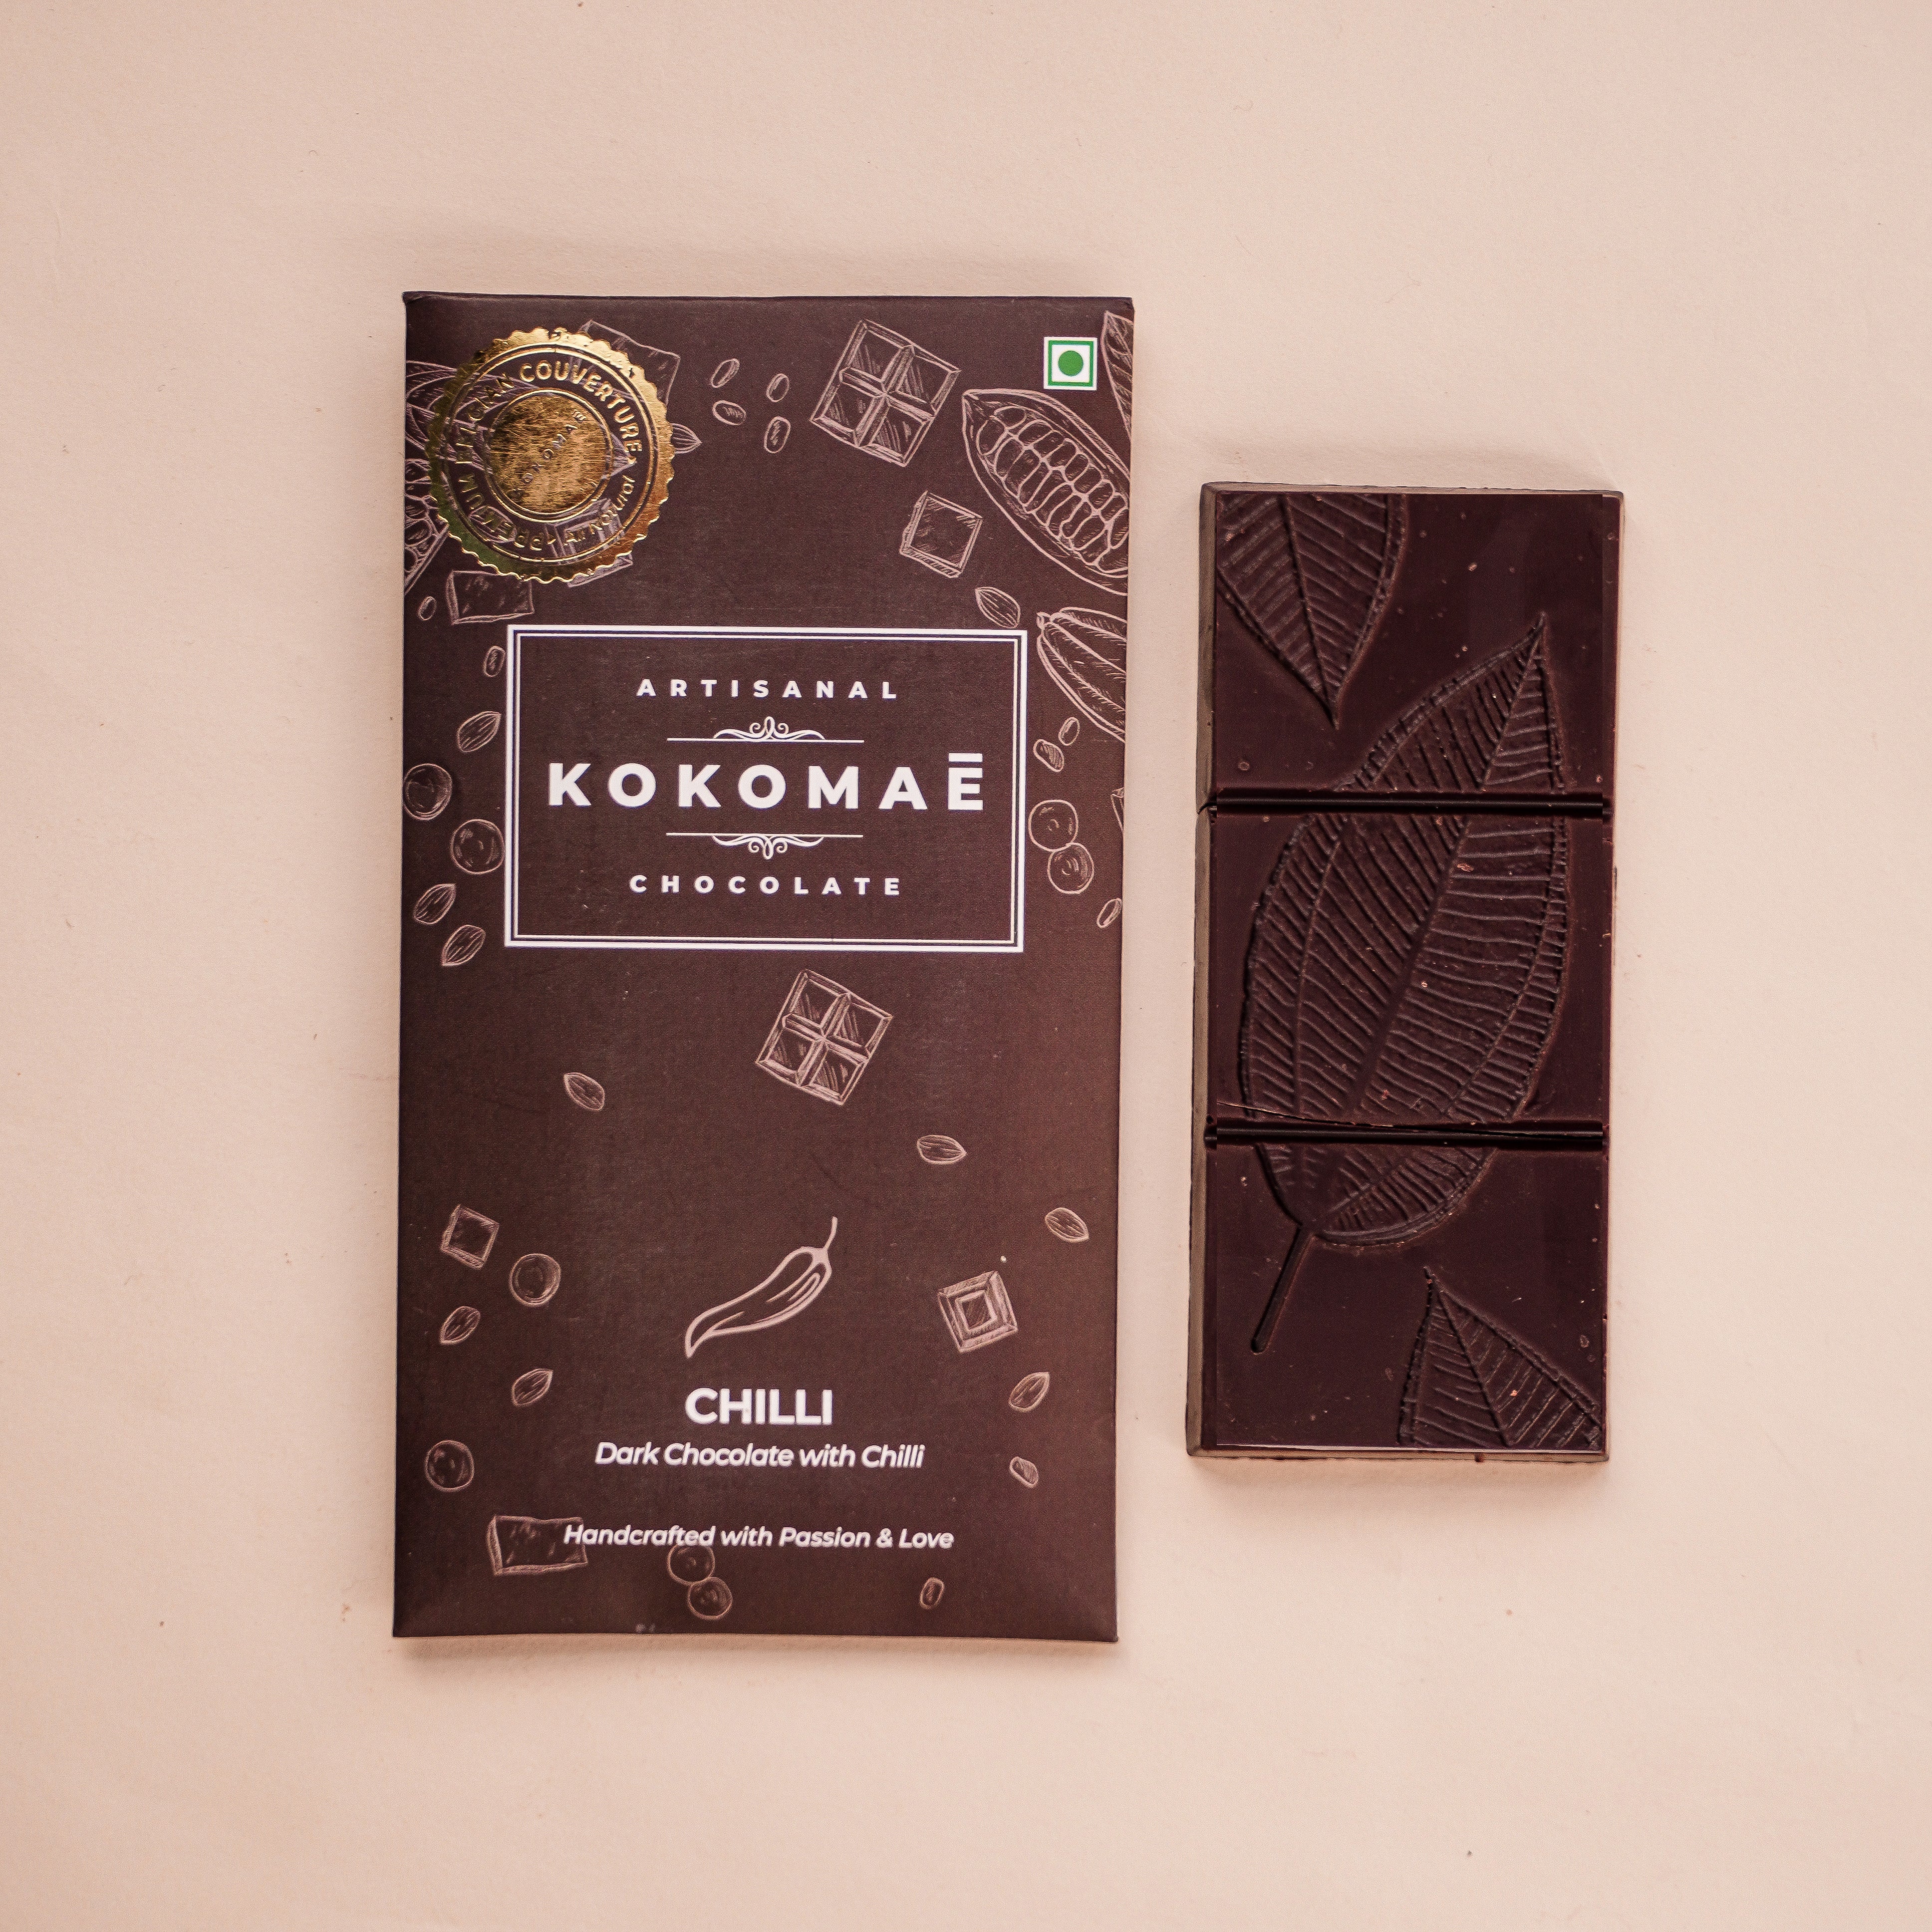 Kokomaē Belgian Pure Couverture Premium Dark Chocolate Bar with Chilli (Vegan and Handmade)